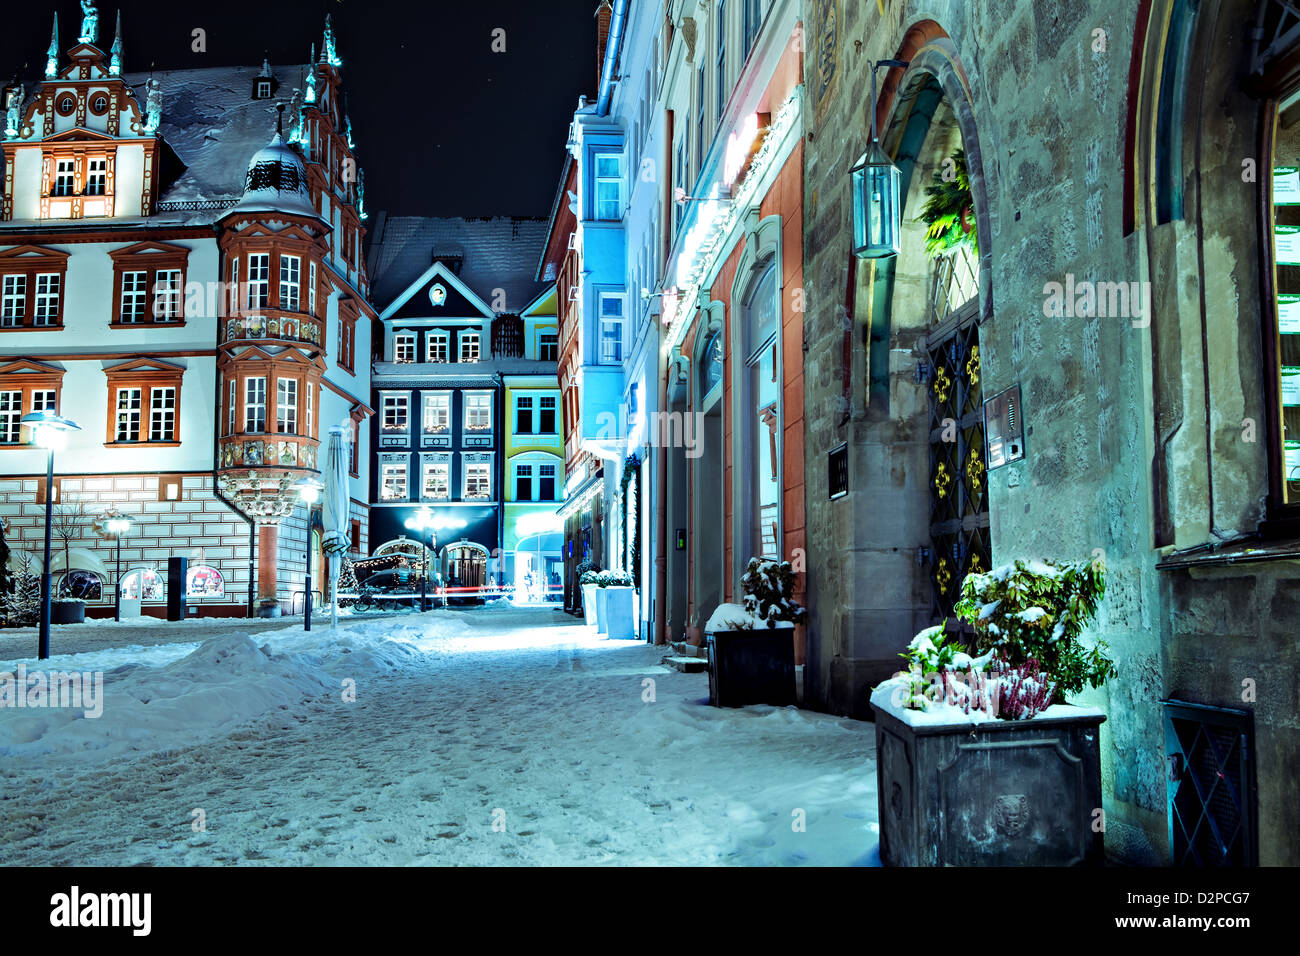 Night scenes of wintry Coburg in Bavaria, Germany Stock Photo